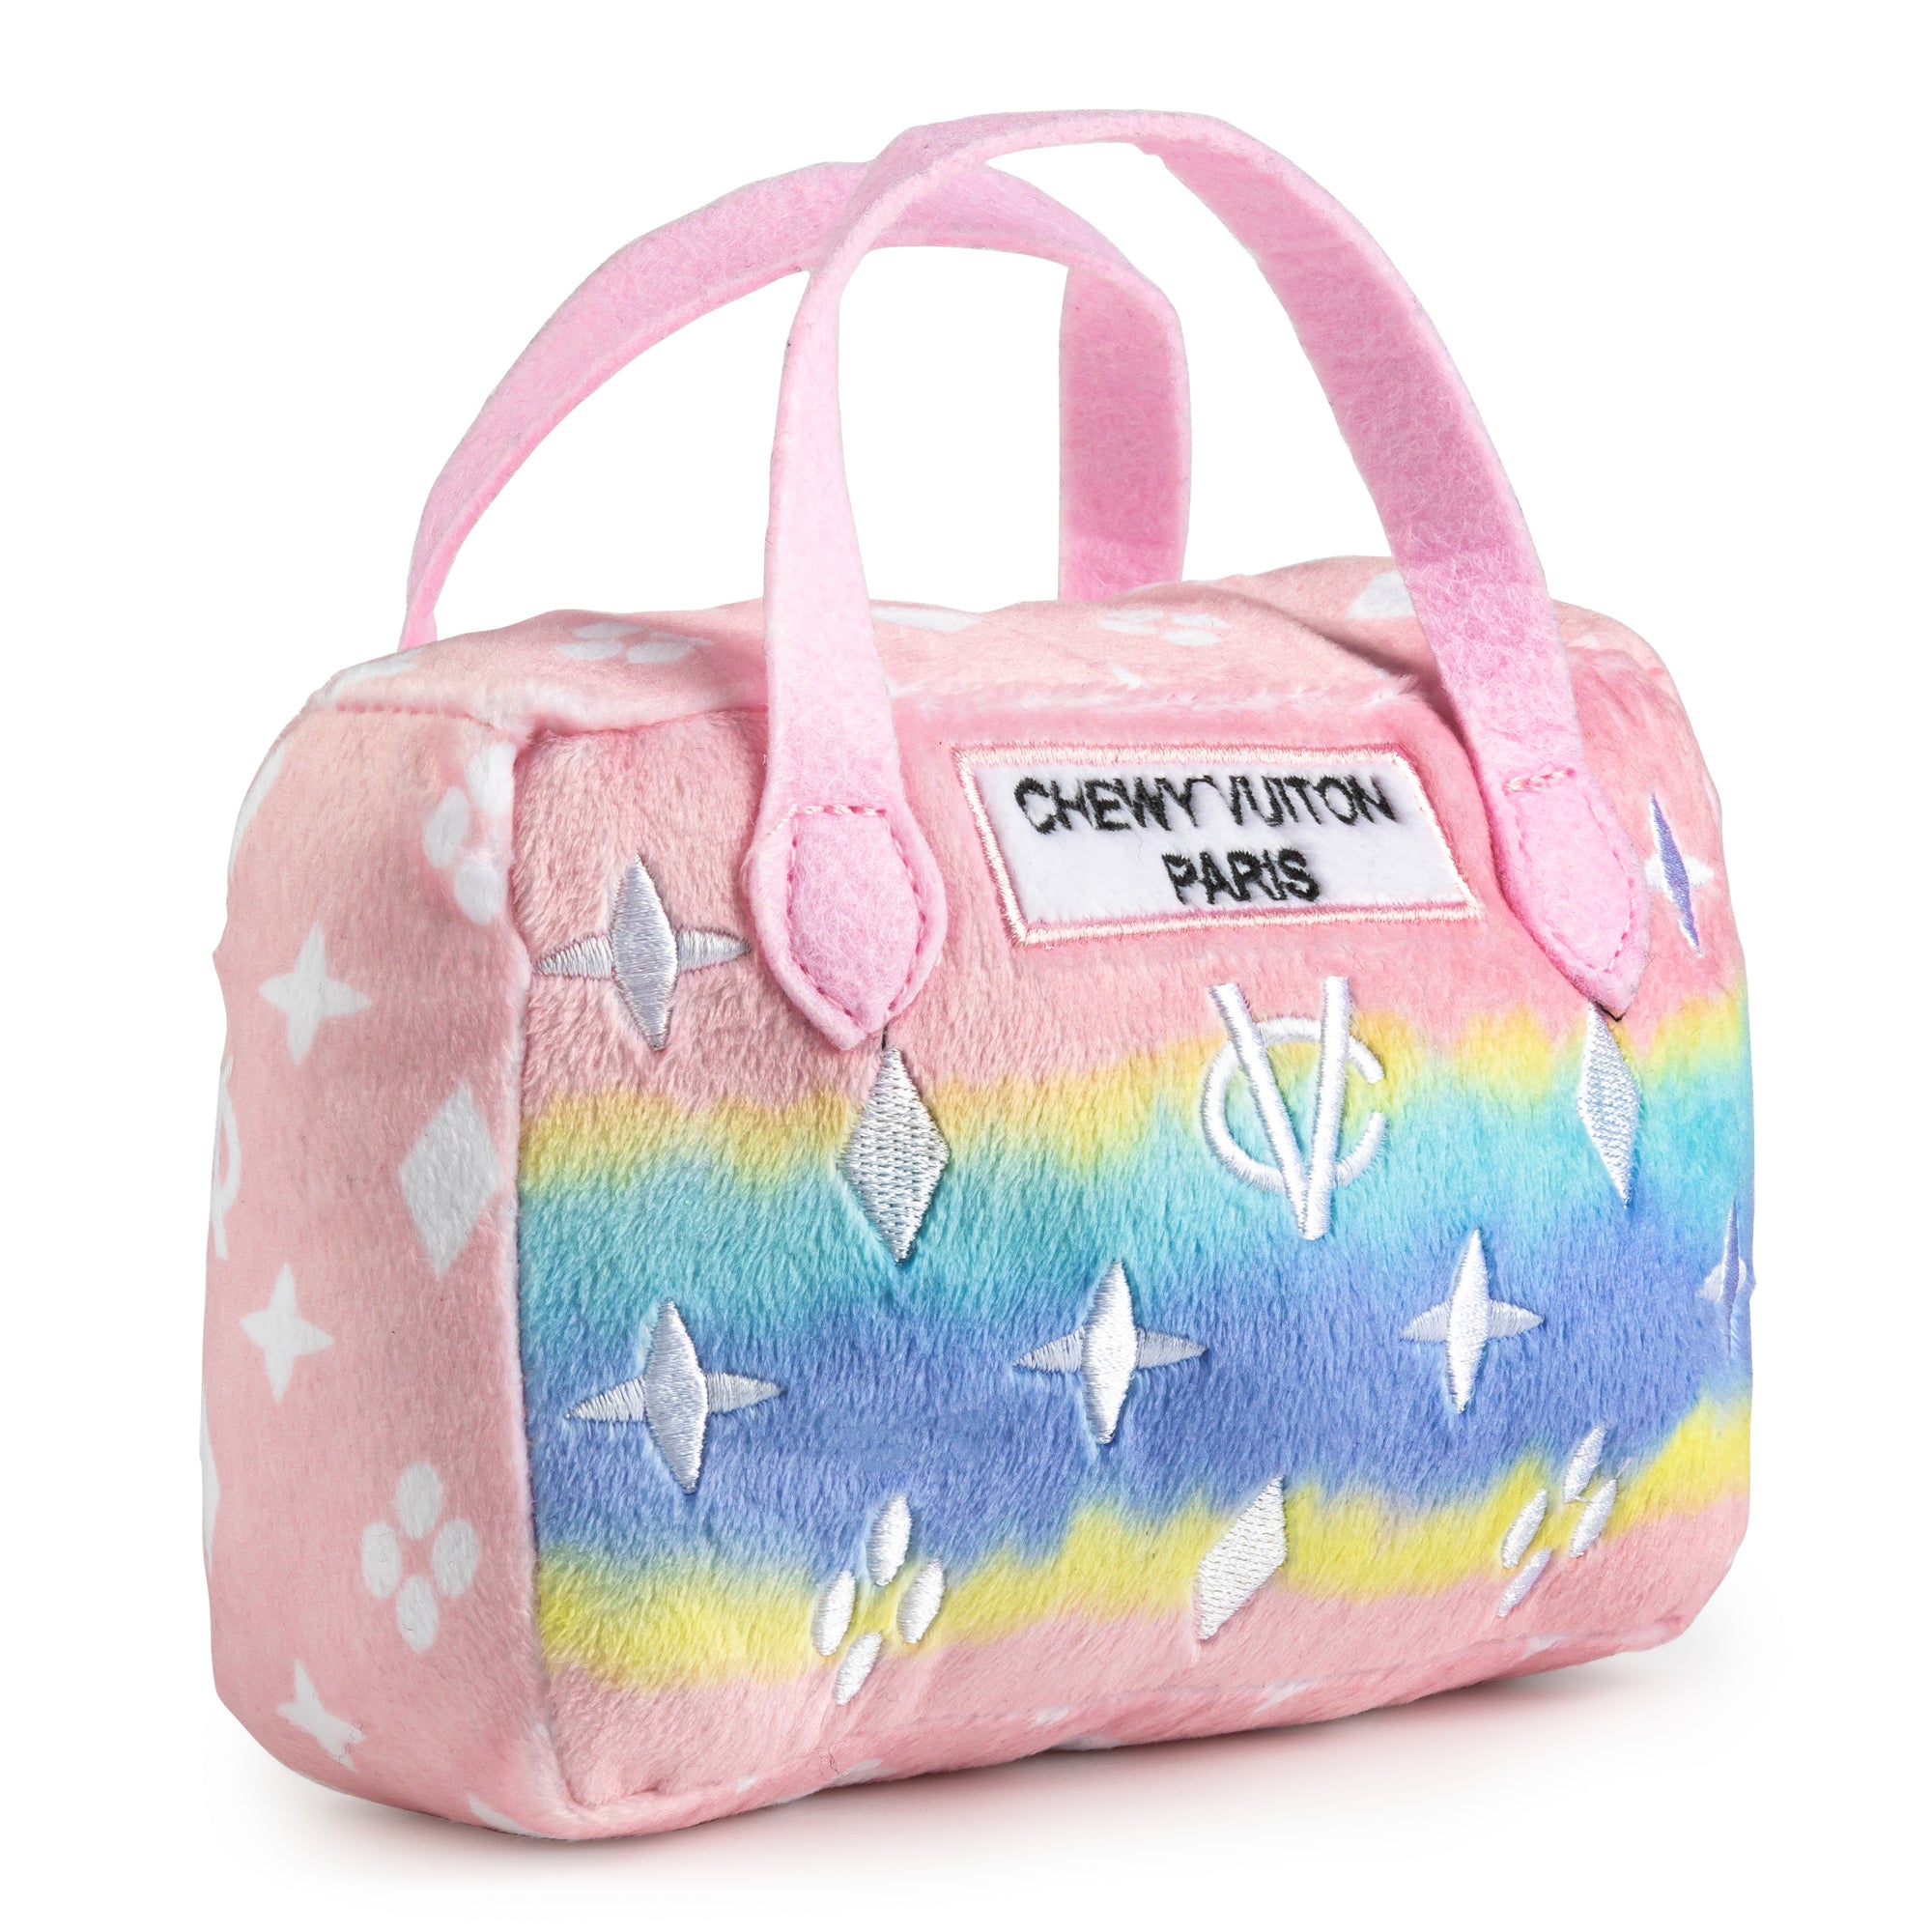 pink ombre chewy vuitton handbag - AP & Company